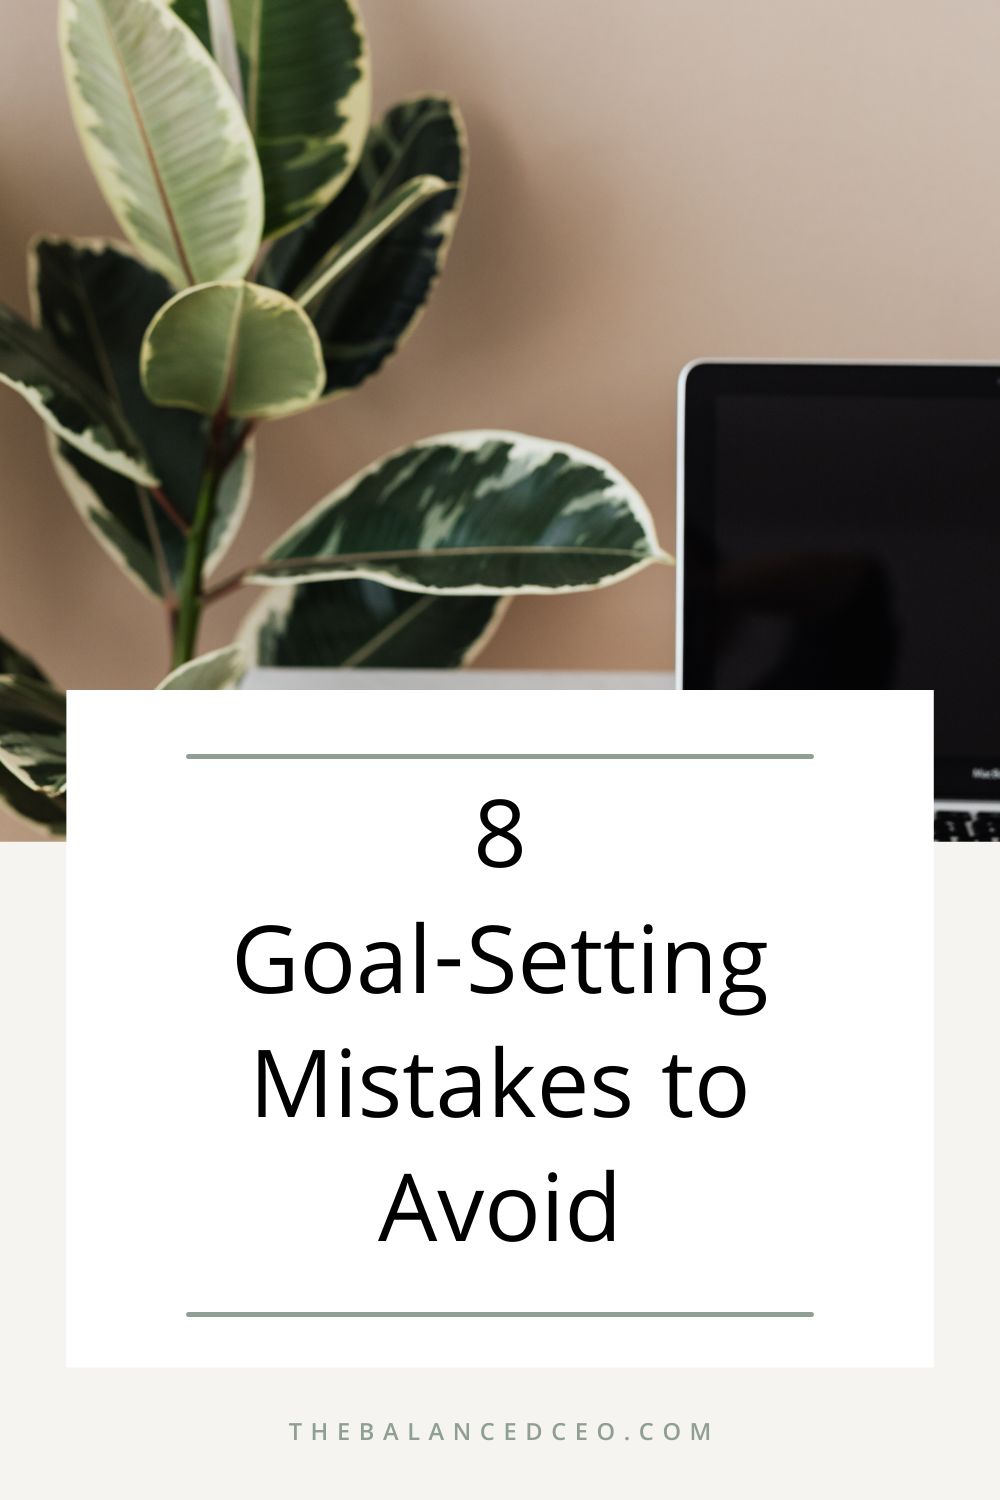 8 Goal-Setting Mistakes to Avoid